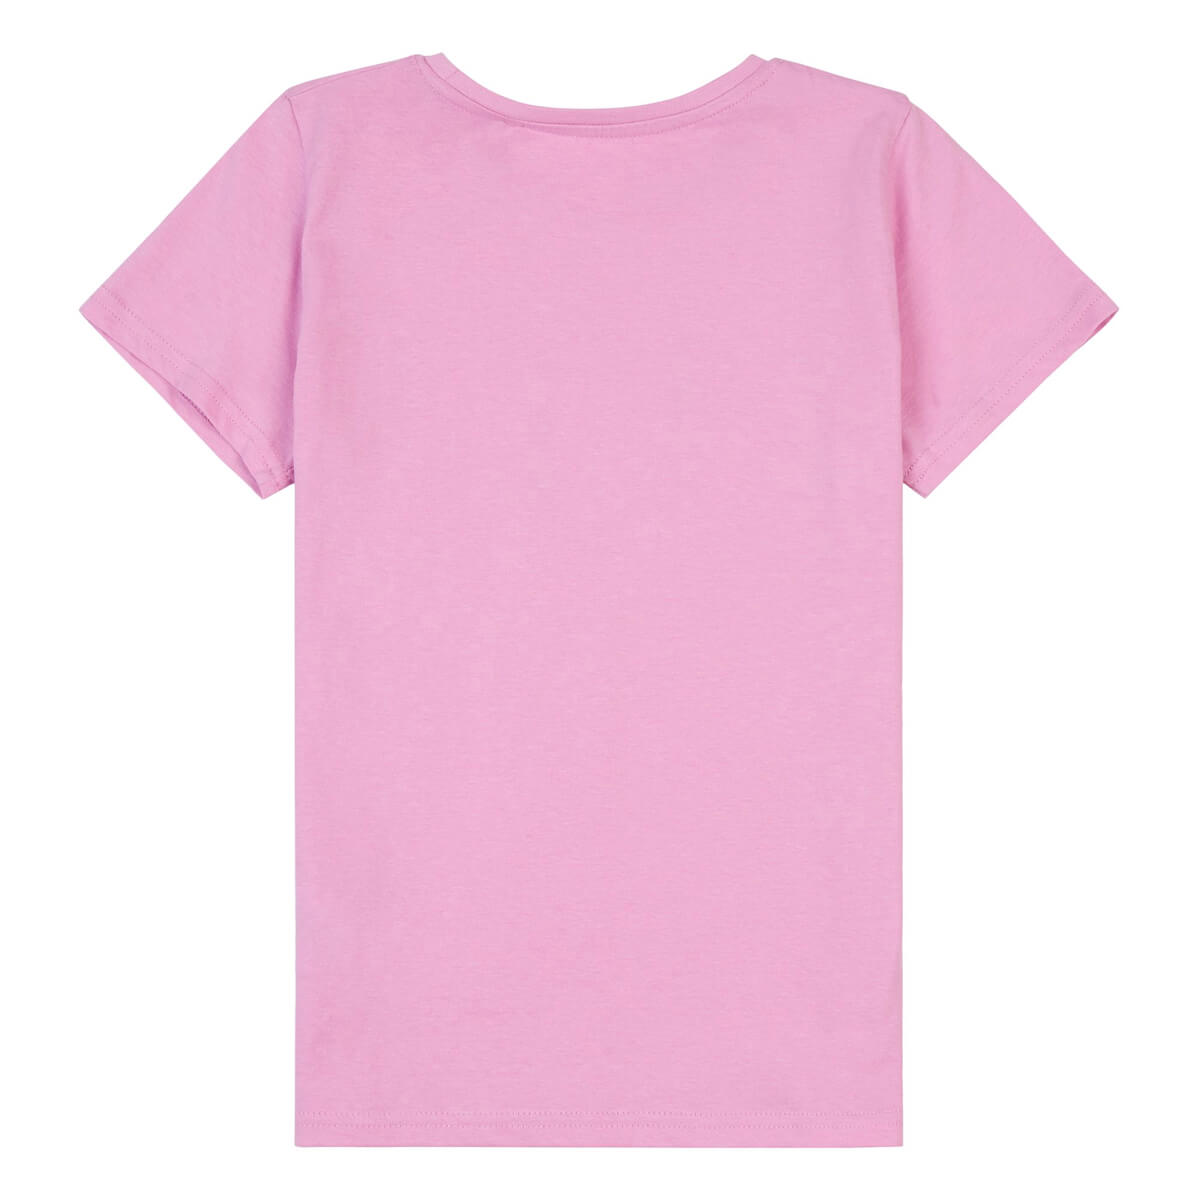 Elle Girls Purple Logo Fitted T-Shirt